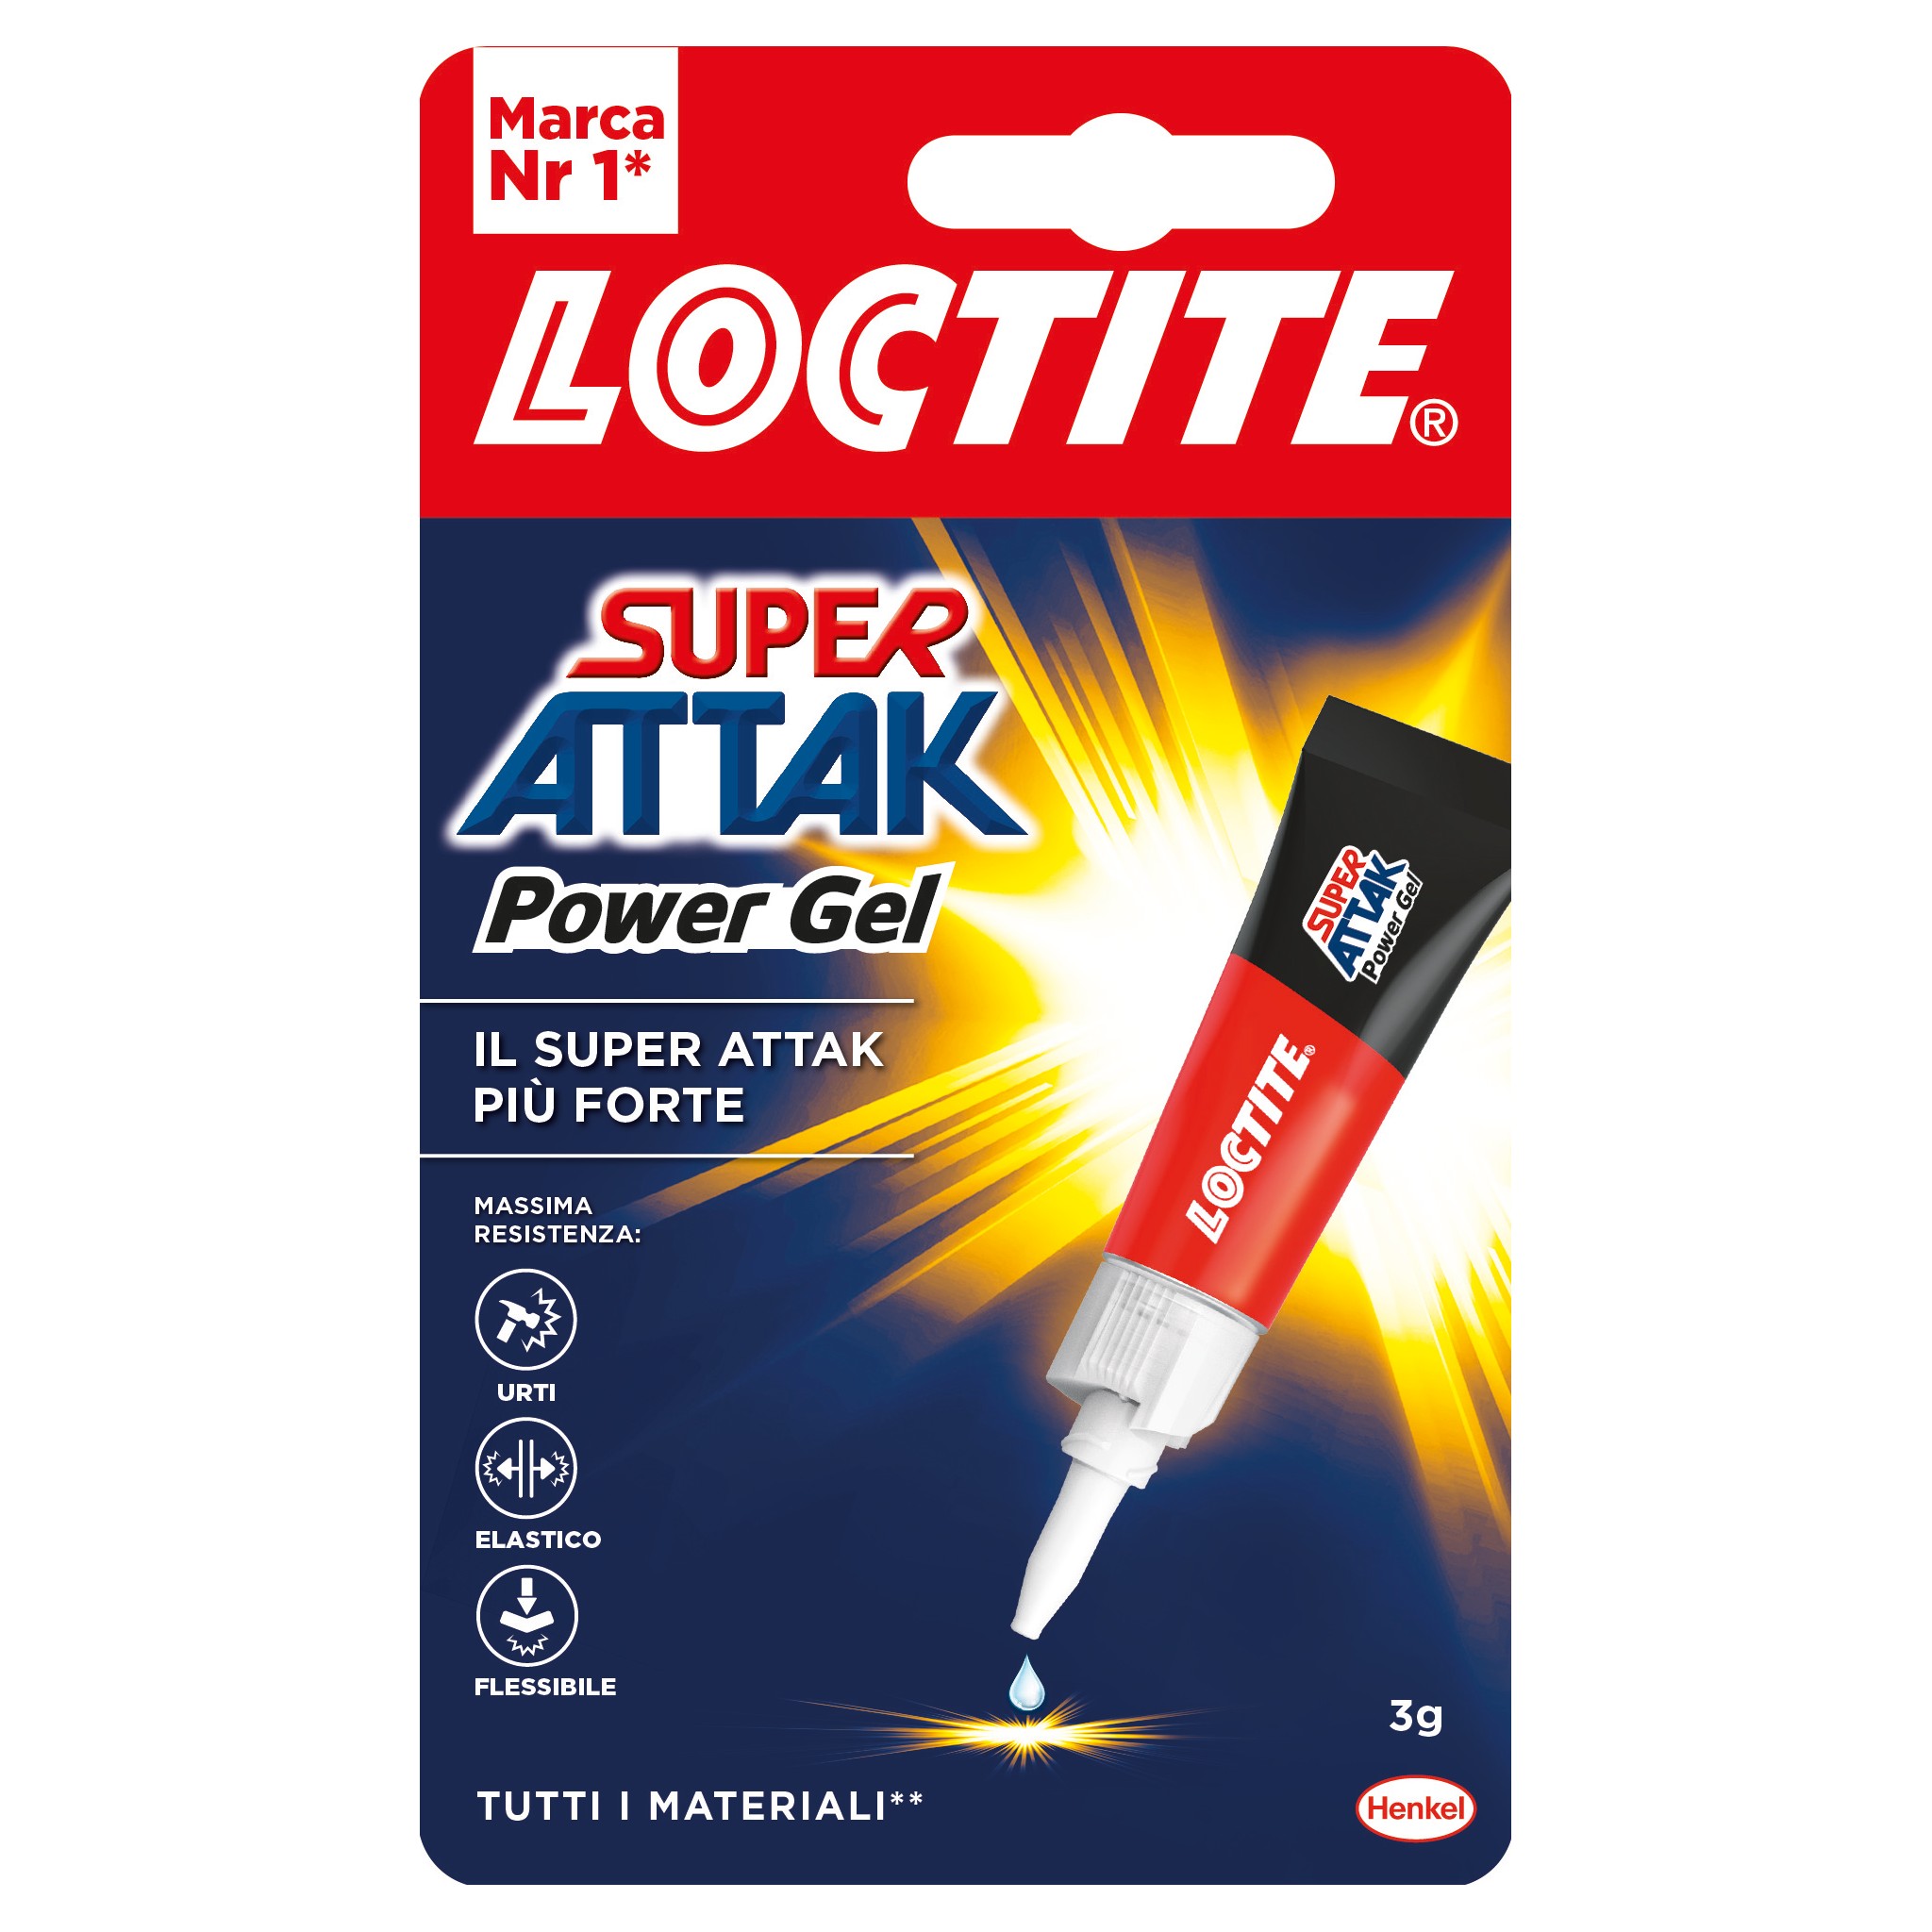 Loctite Super Attak Power Gel (Reparto cancelleria)